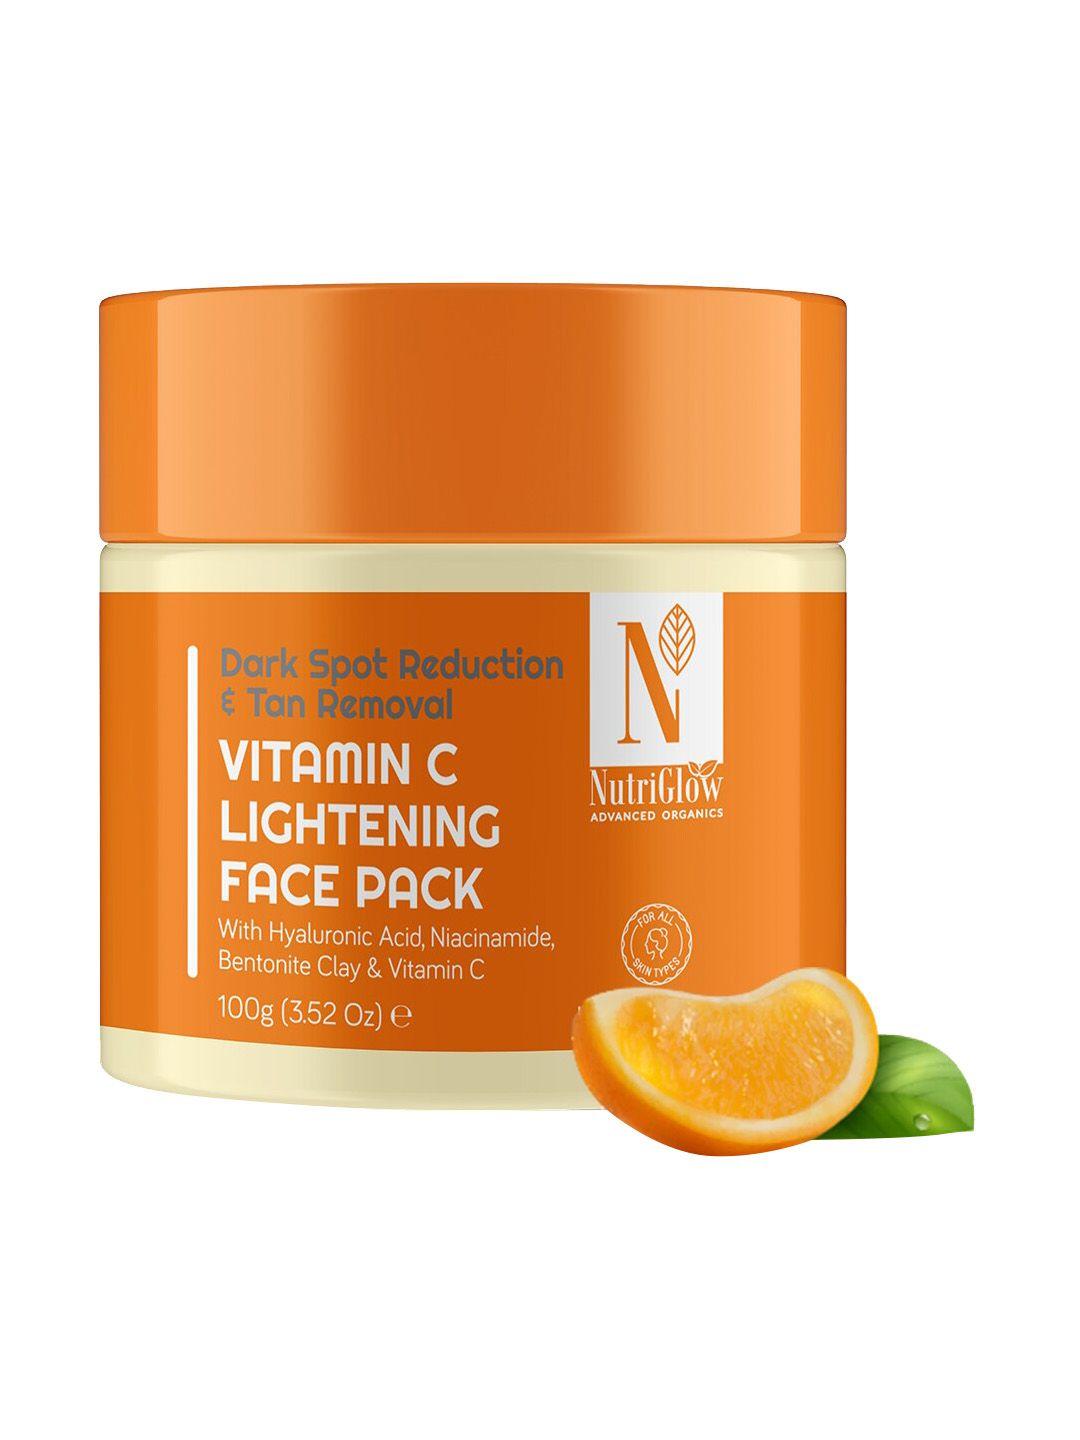 nutriglow advanced organics dark spot reduction & tan removal vitamin c lightening face pack - 100gm